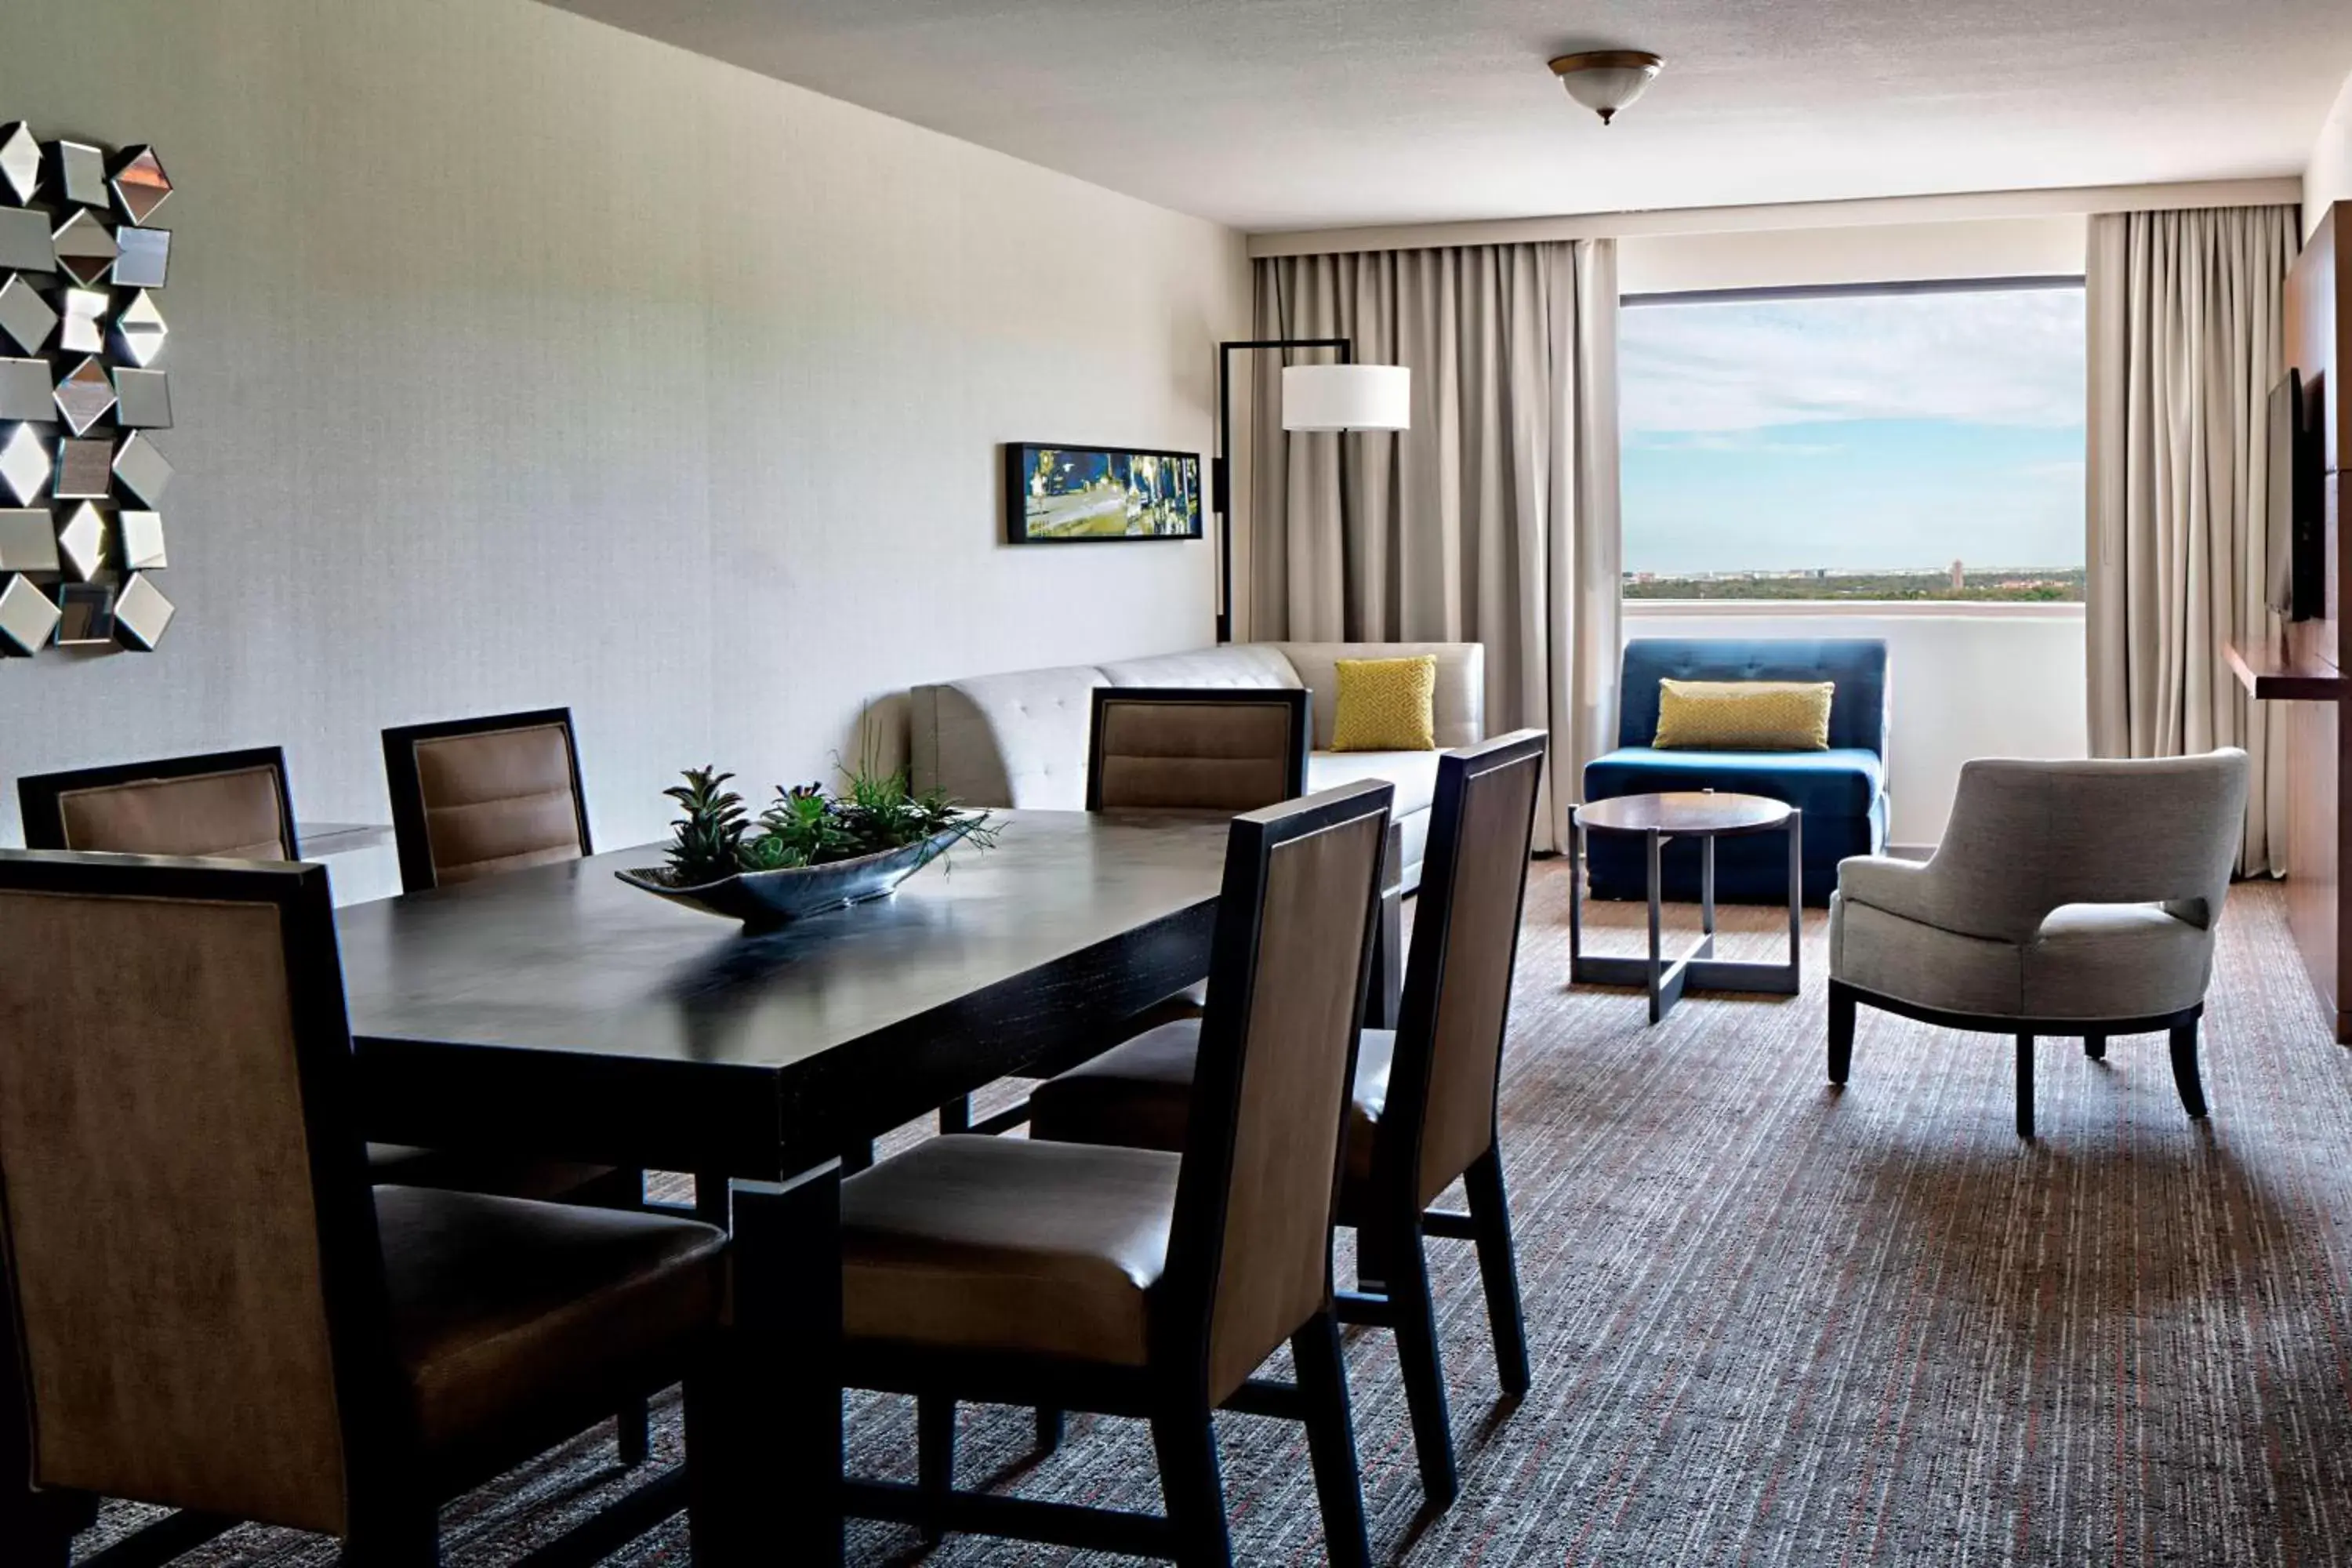 Photo of the whole room, Dining Area in San Antonio Marriott Northwest